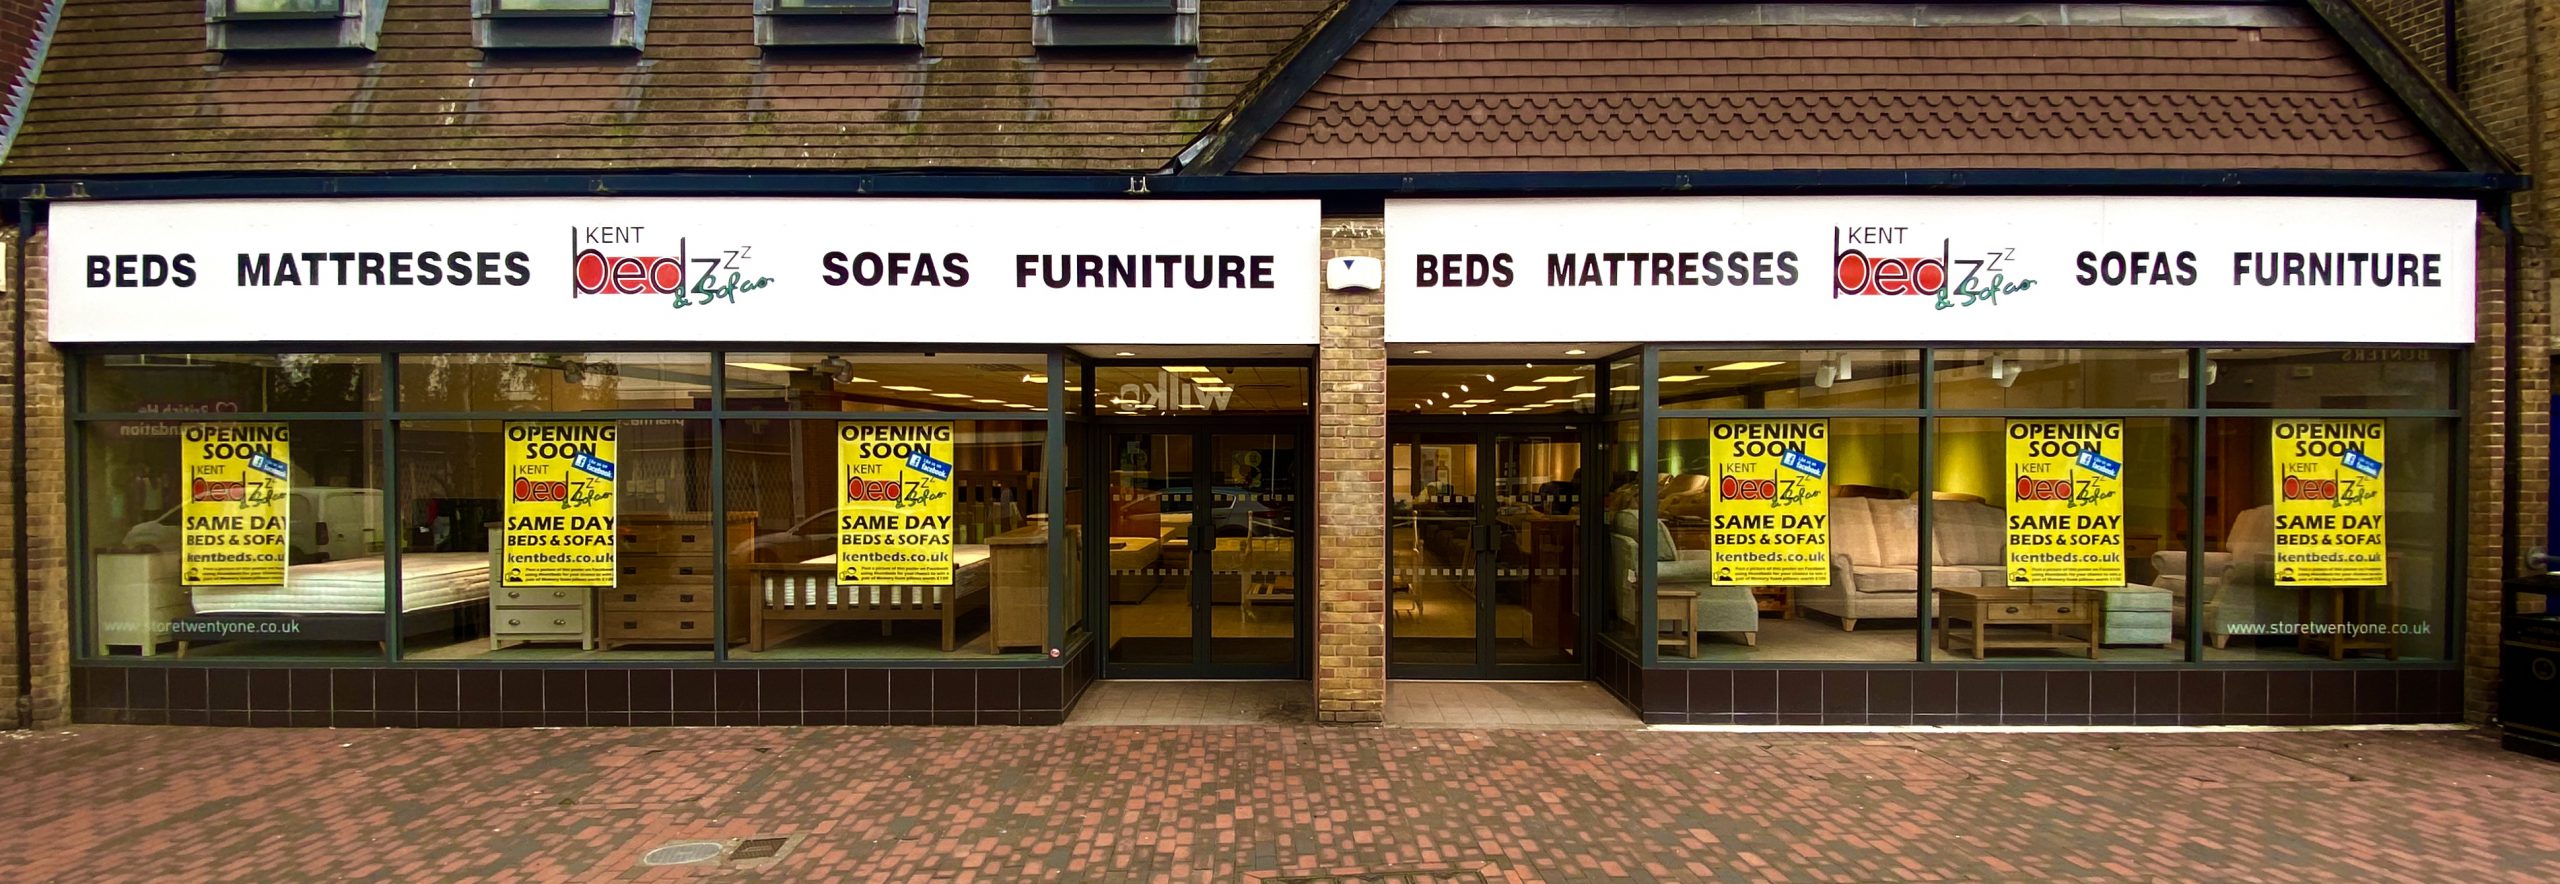 bedroom furniture stores kent